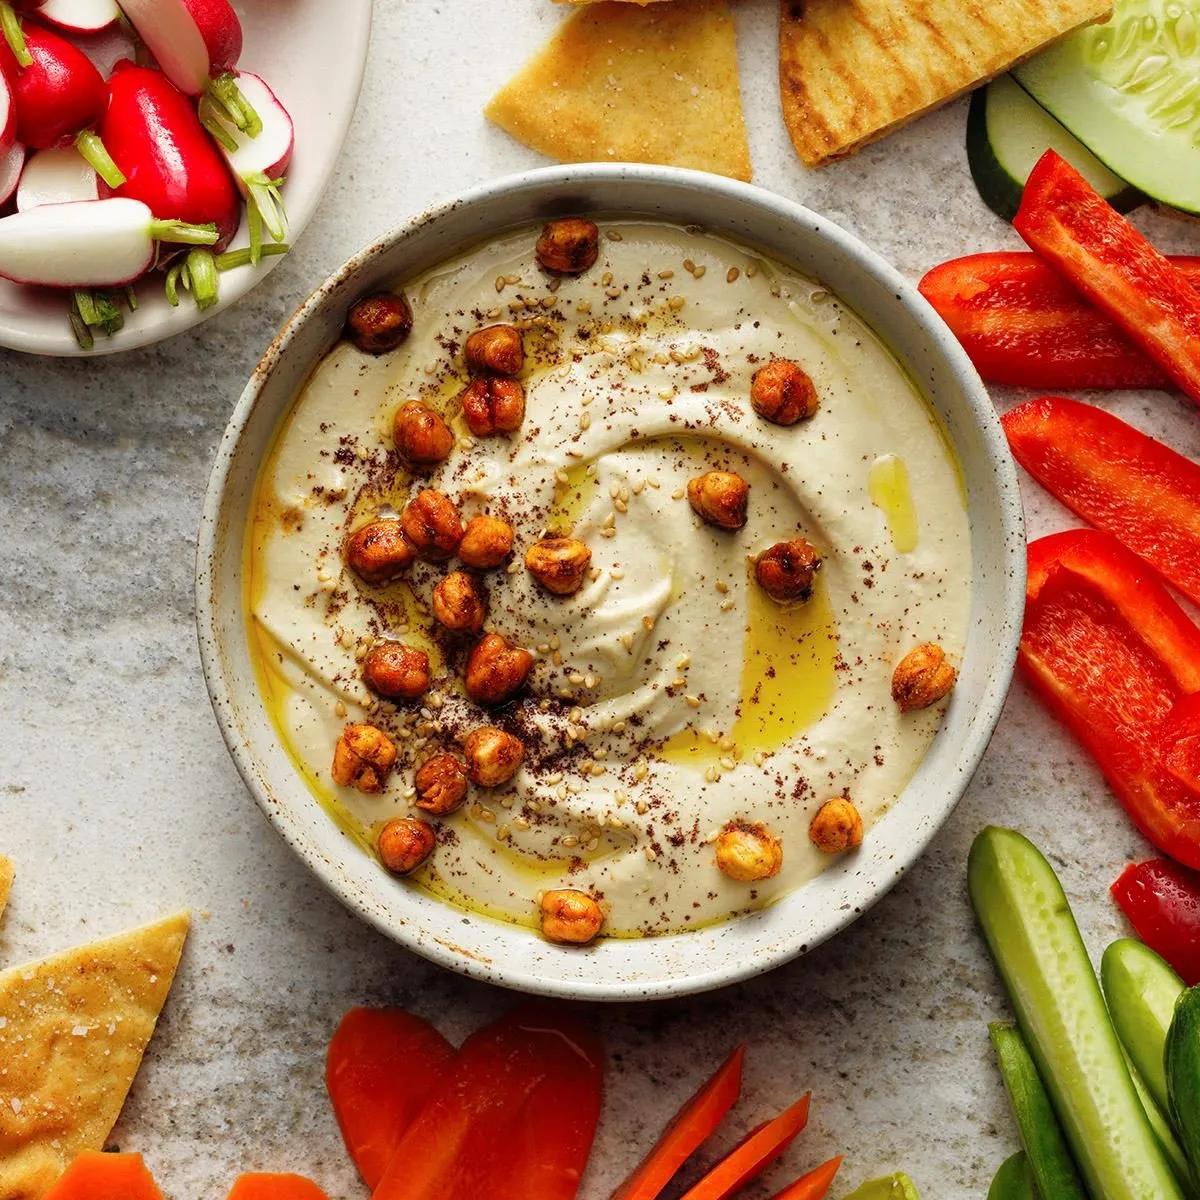 Best Hummus Recipe: How to Make It